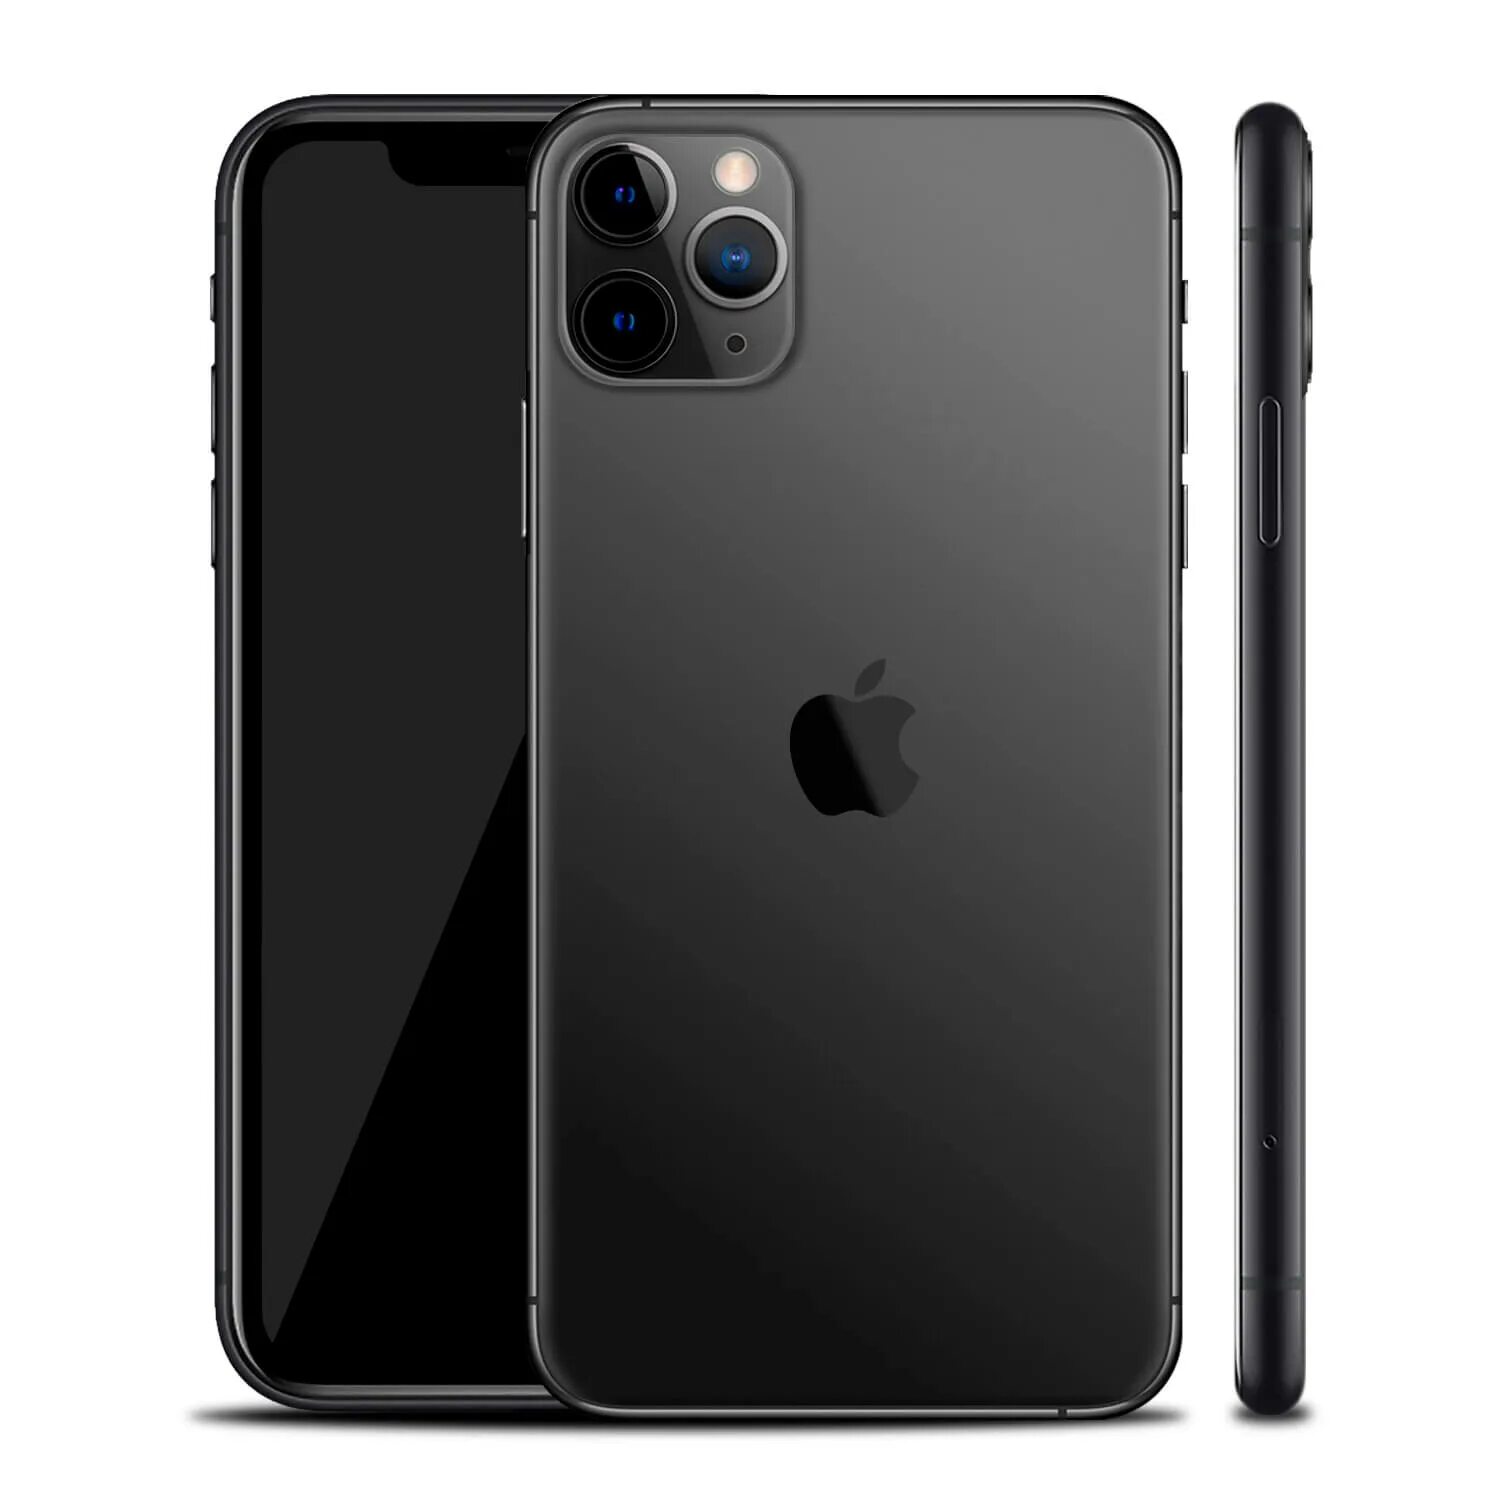 Iphone 11 Pro Max Black. Iphone 11 64gb Black. Iphone 11 Pro Max 256gb черный. Iphone 11 Pro 64gb. Айфон 11 256 оригинал